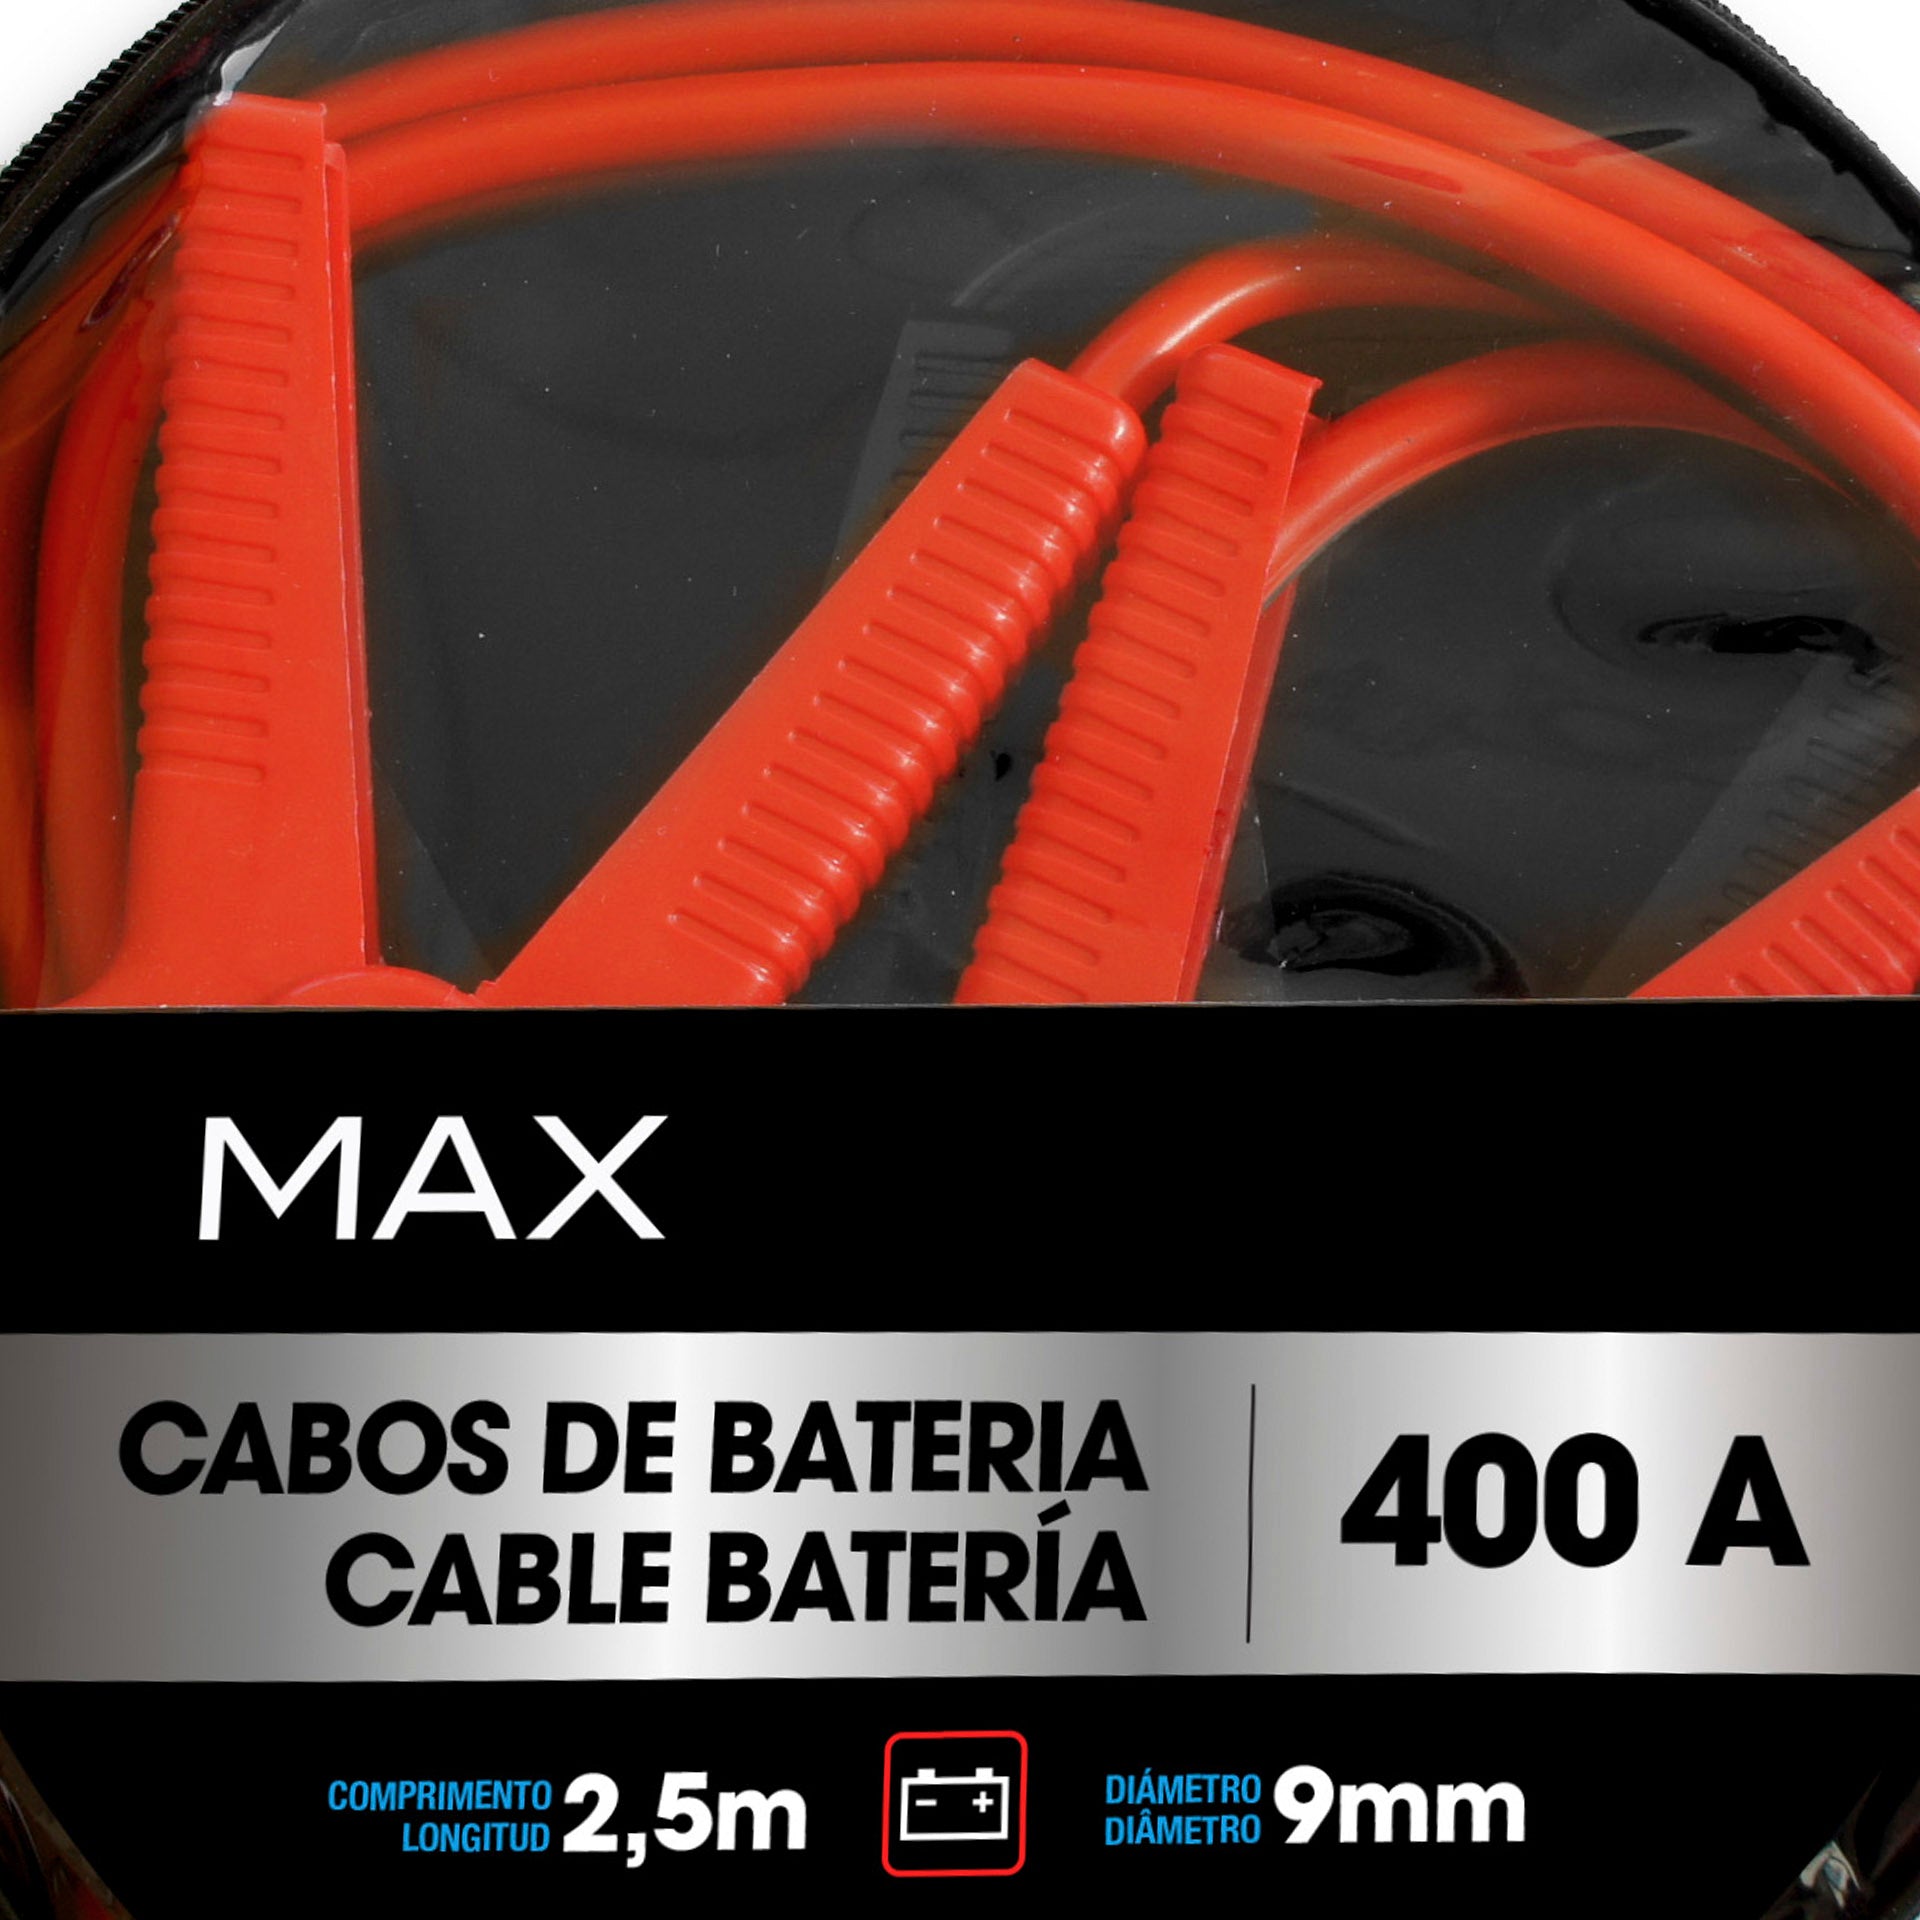 Max Cabos de bateria 400 AMP